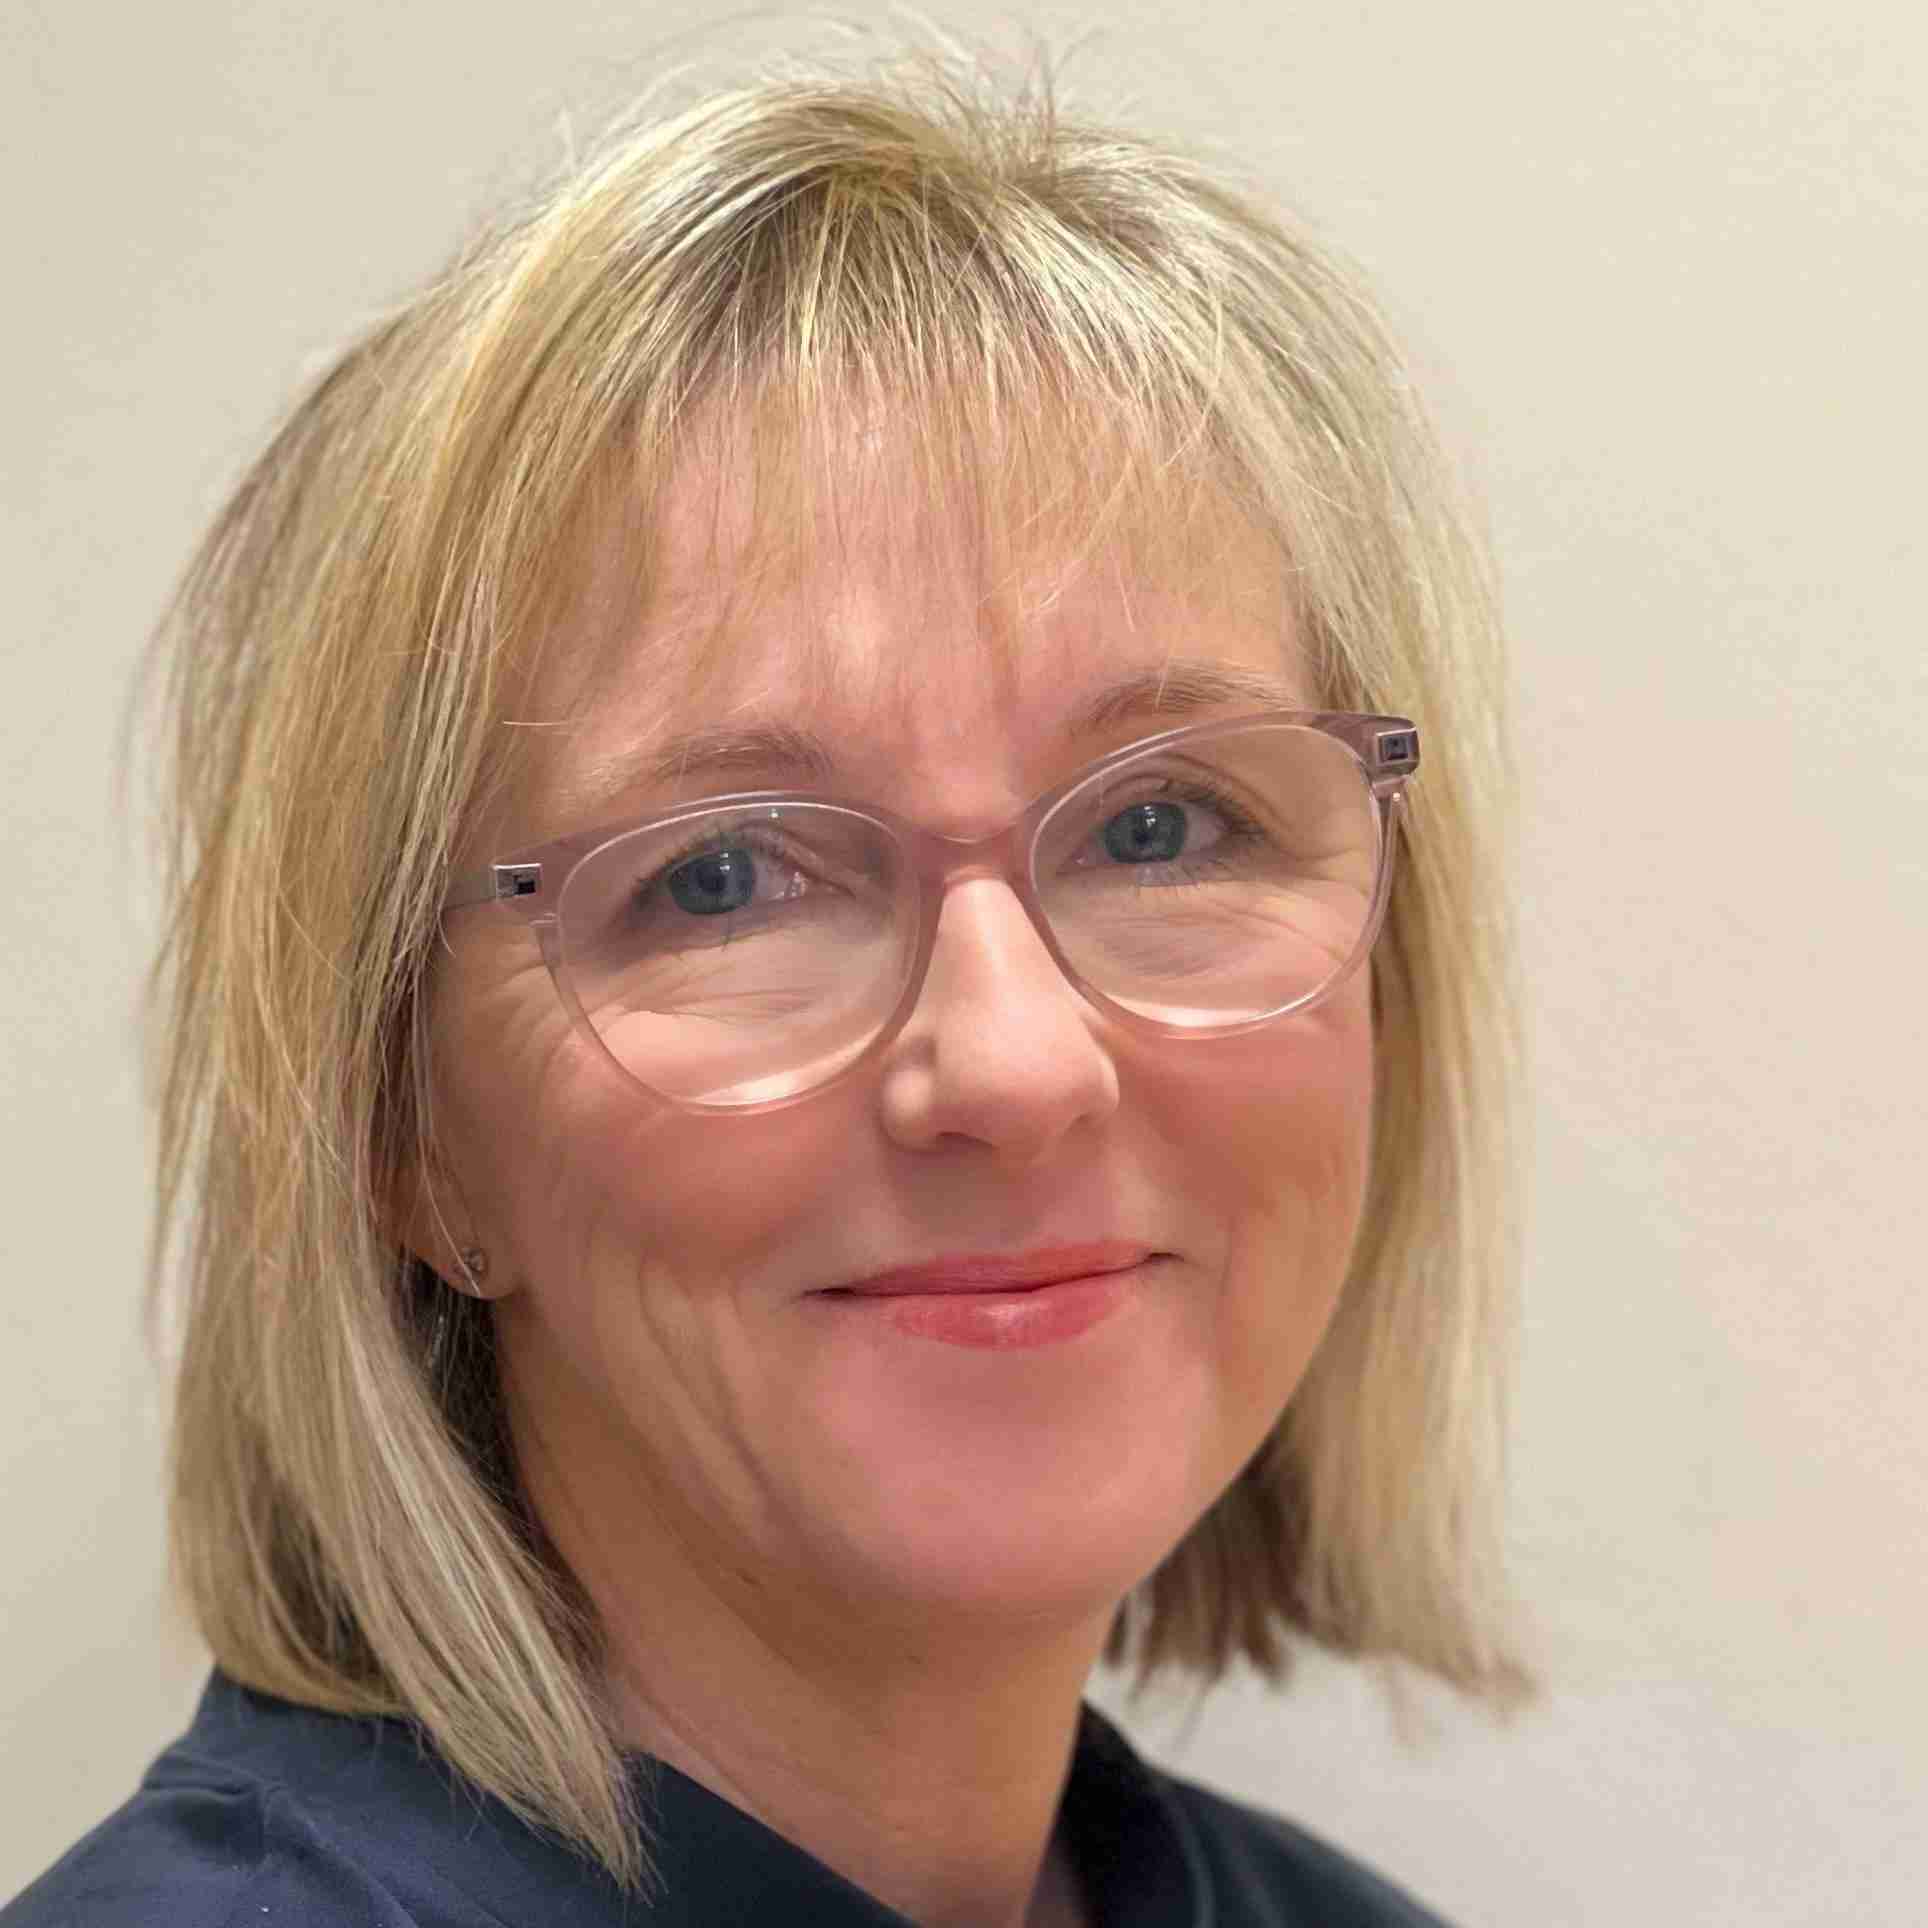 Profile image of Prof Helen Hurst